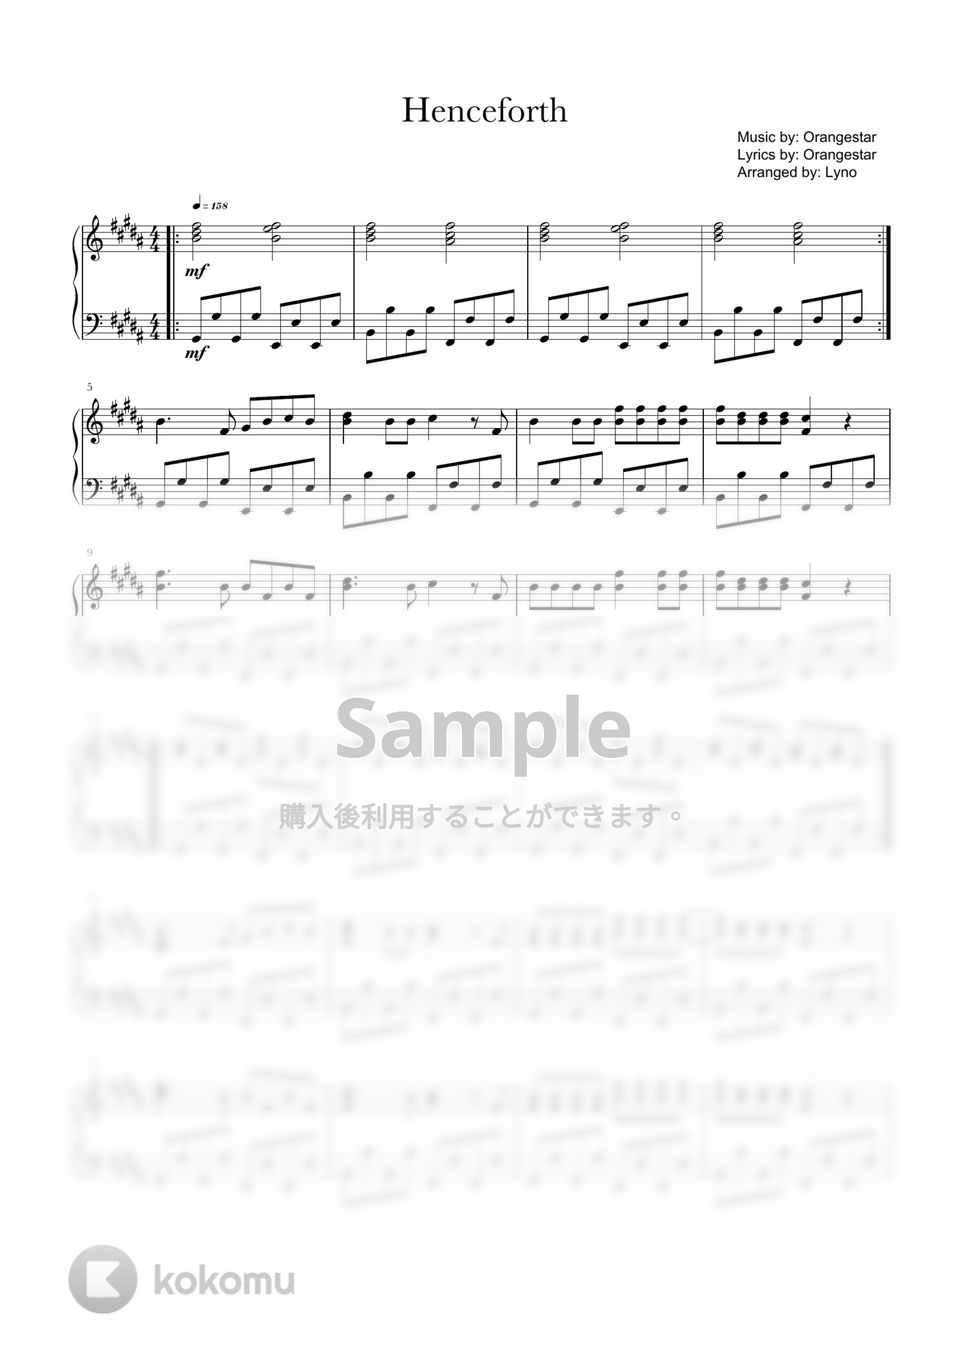 Orangestar - Henceforth (ピアノソロ上級) by Ray